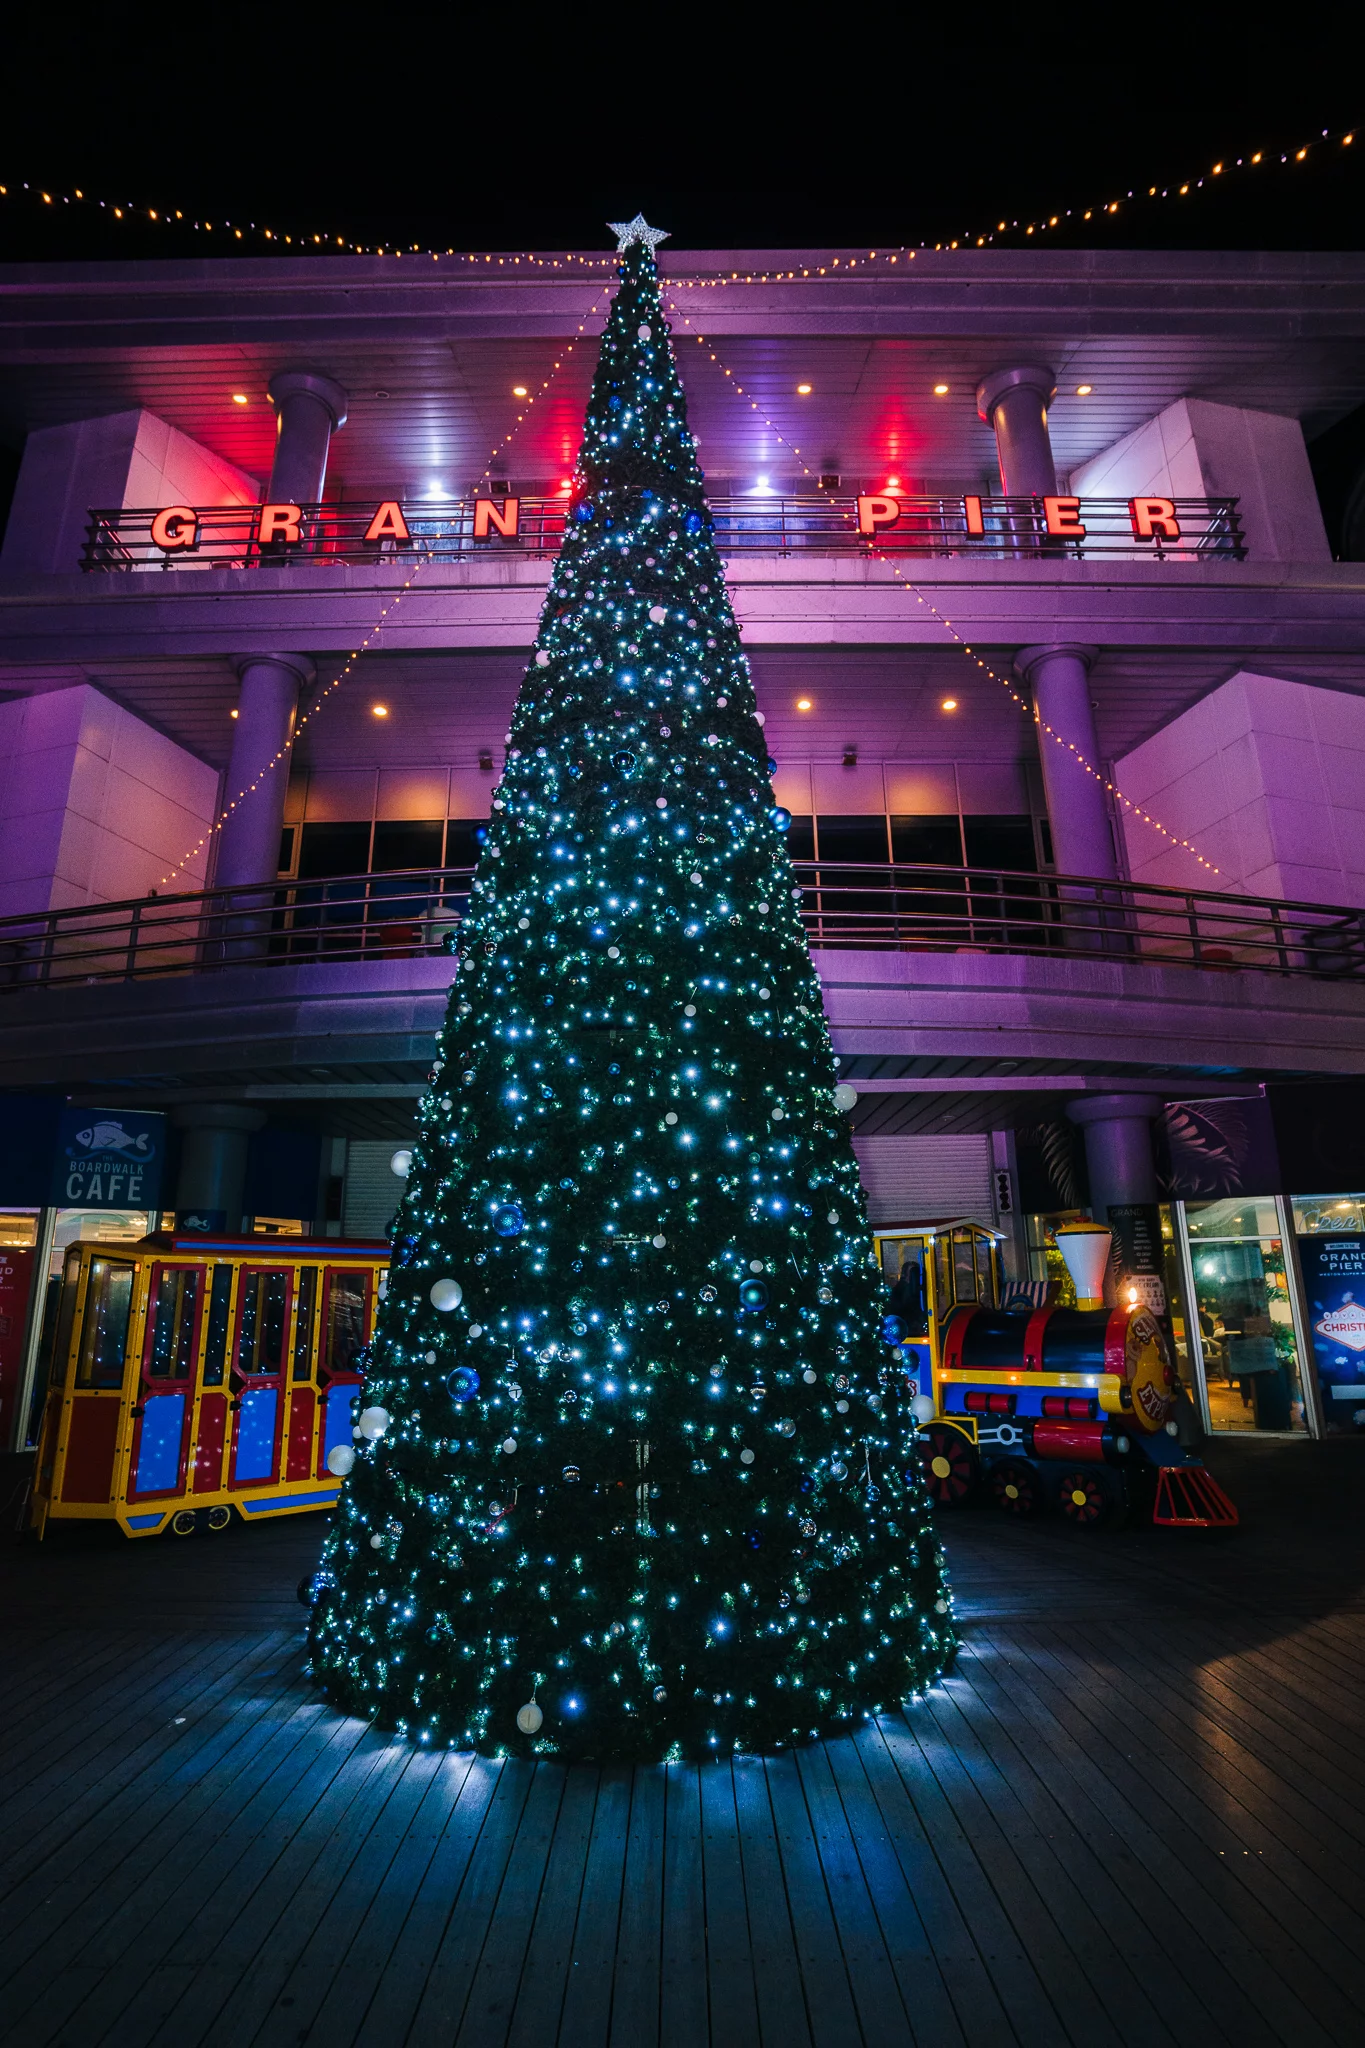 The Grand Pier Christmas Tree, Weston-super-Mare